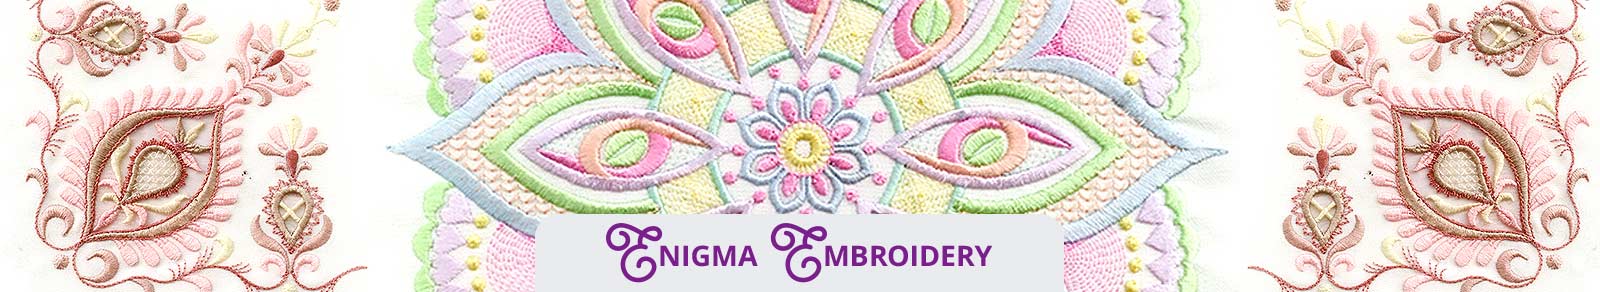 enigma embroidery